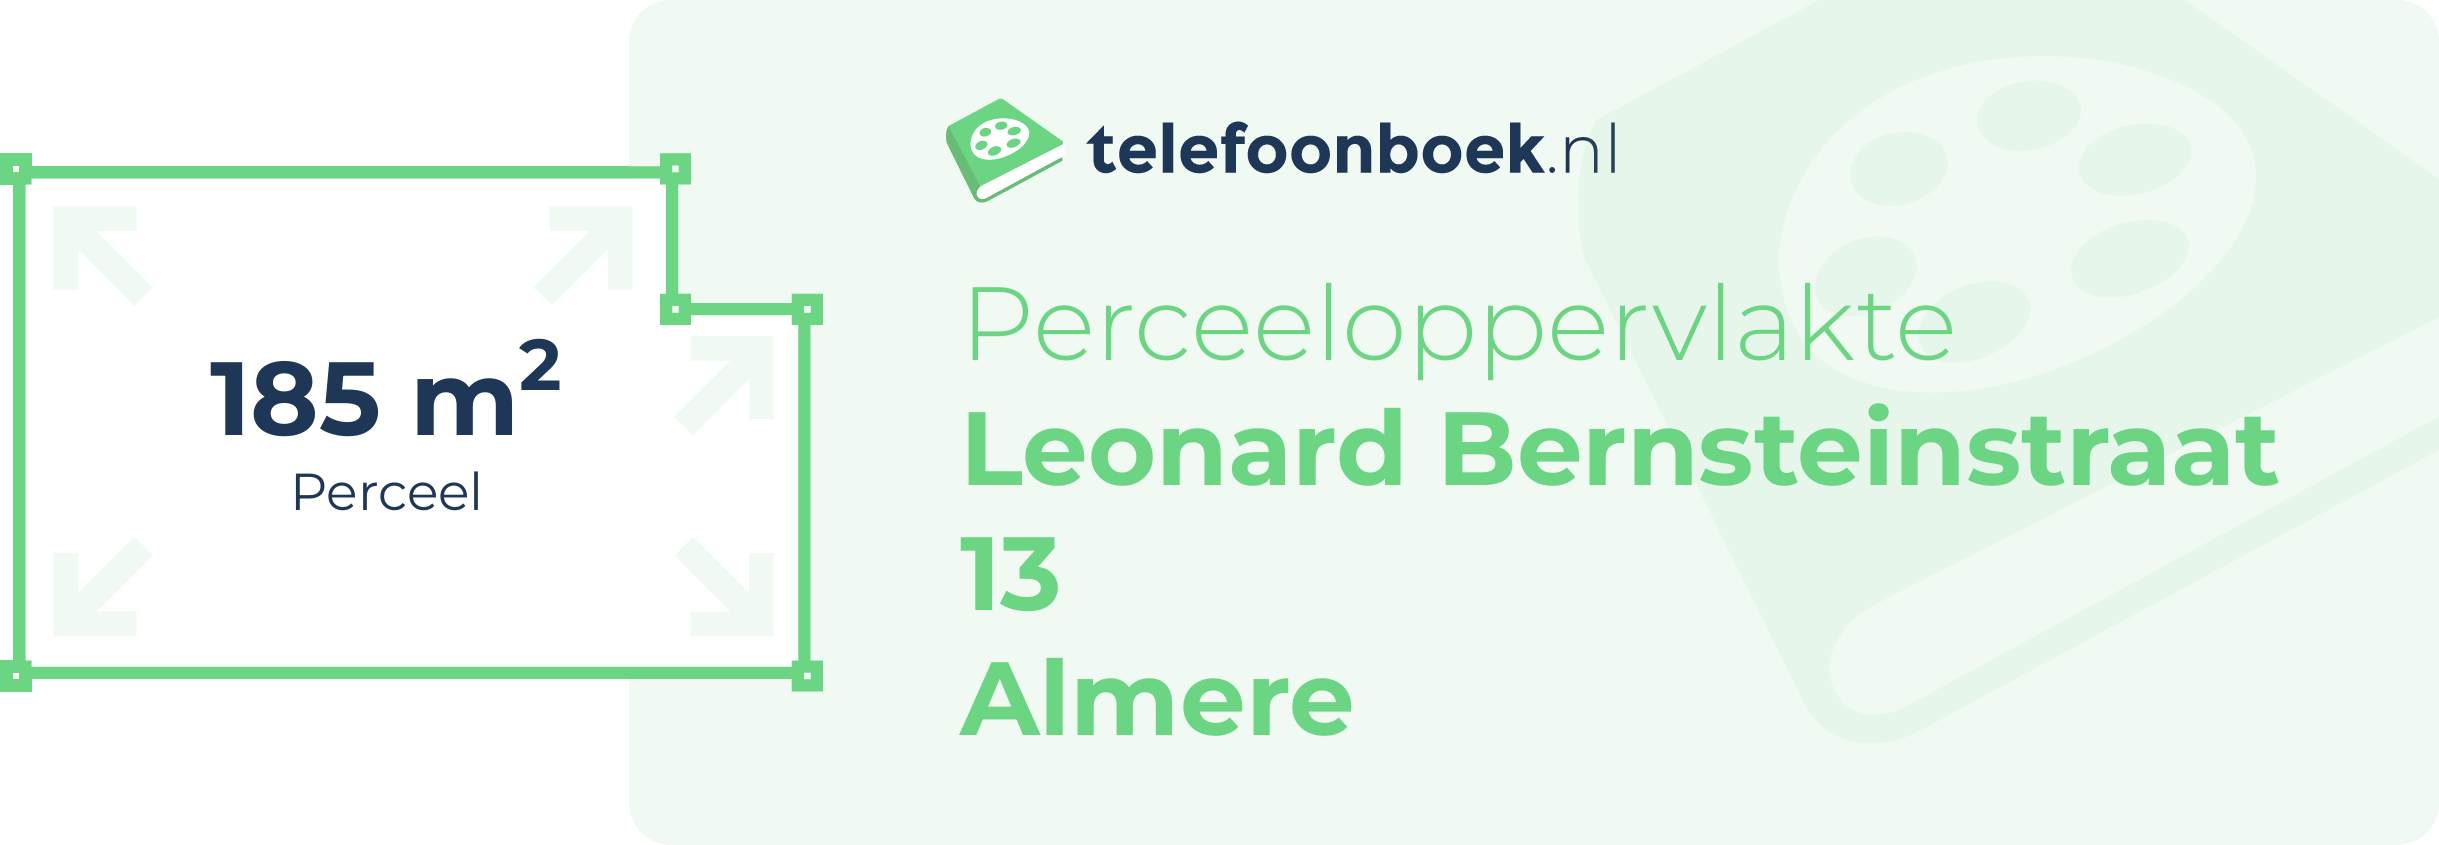 Perceeloppervlakte Leonard Bernsteinstraat 13 Almere